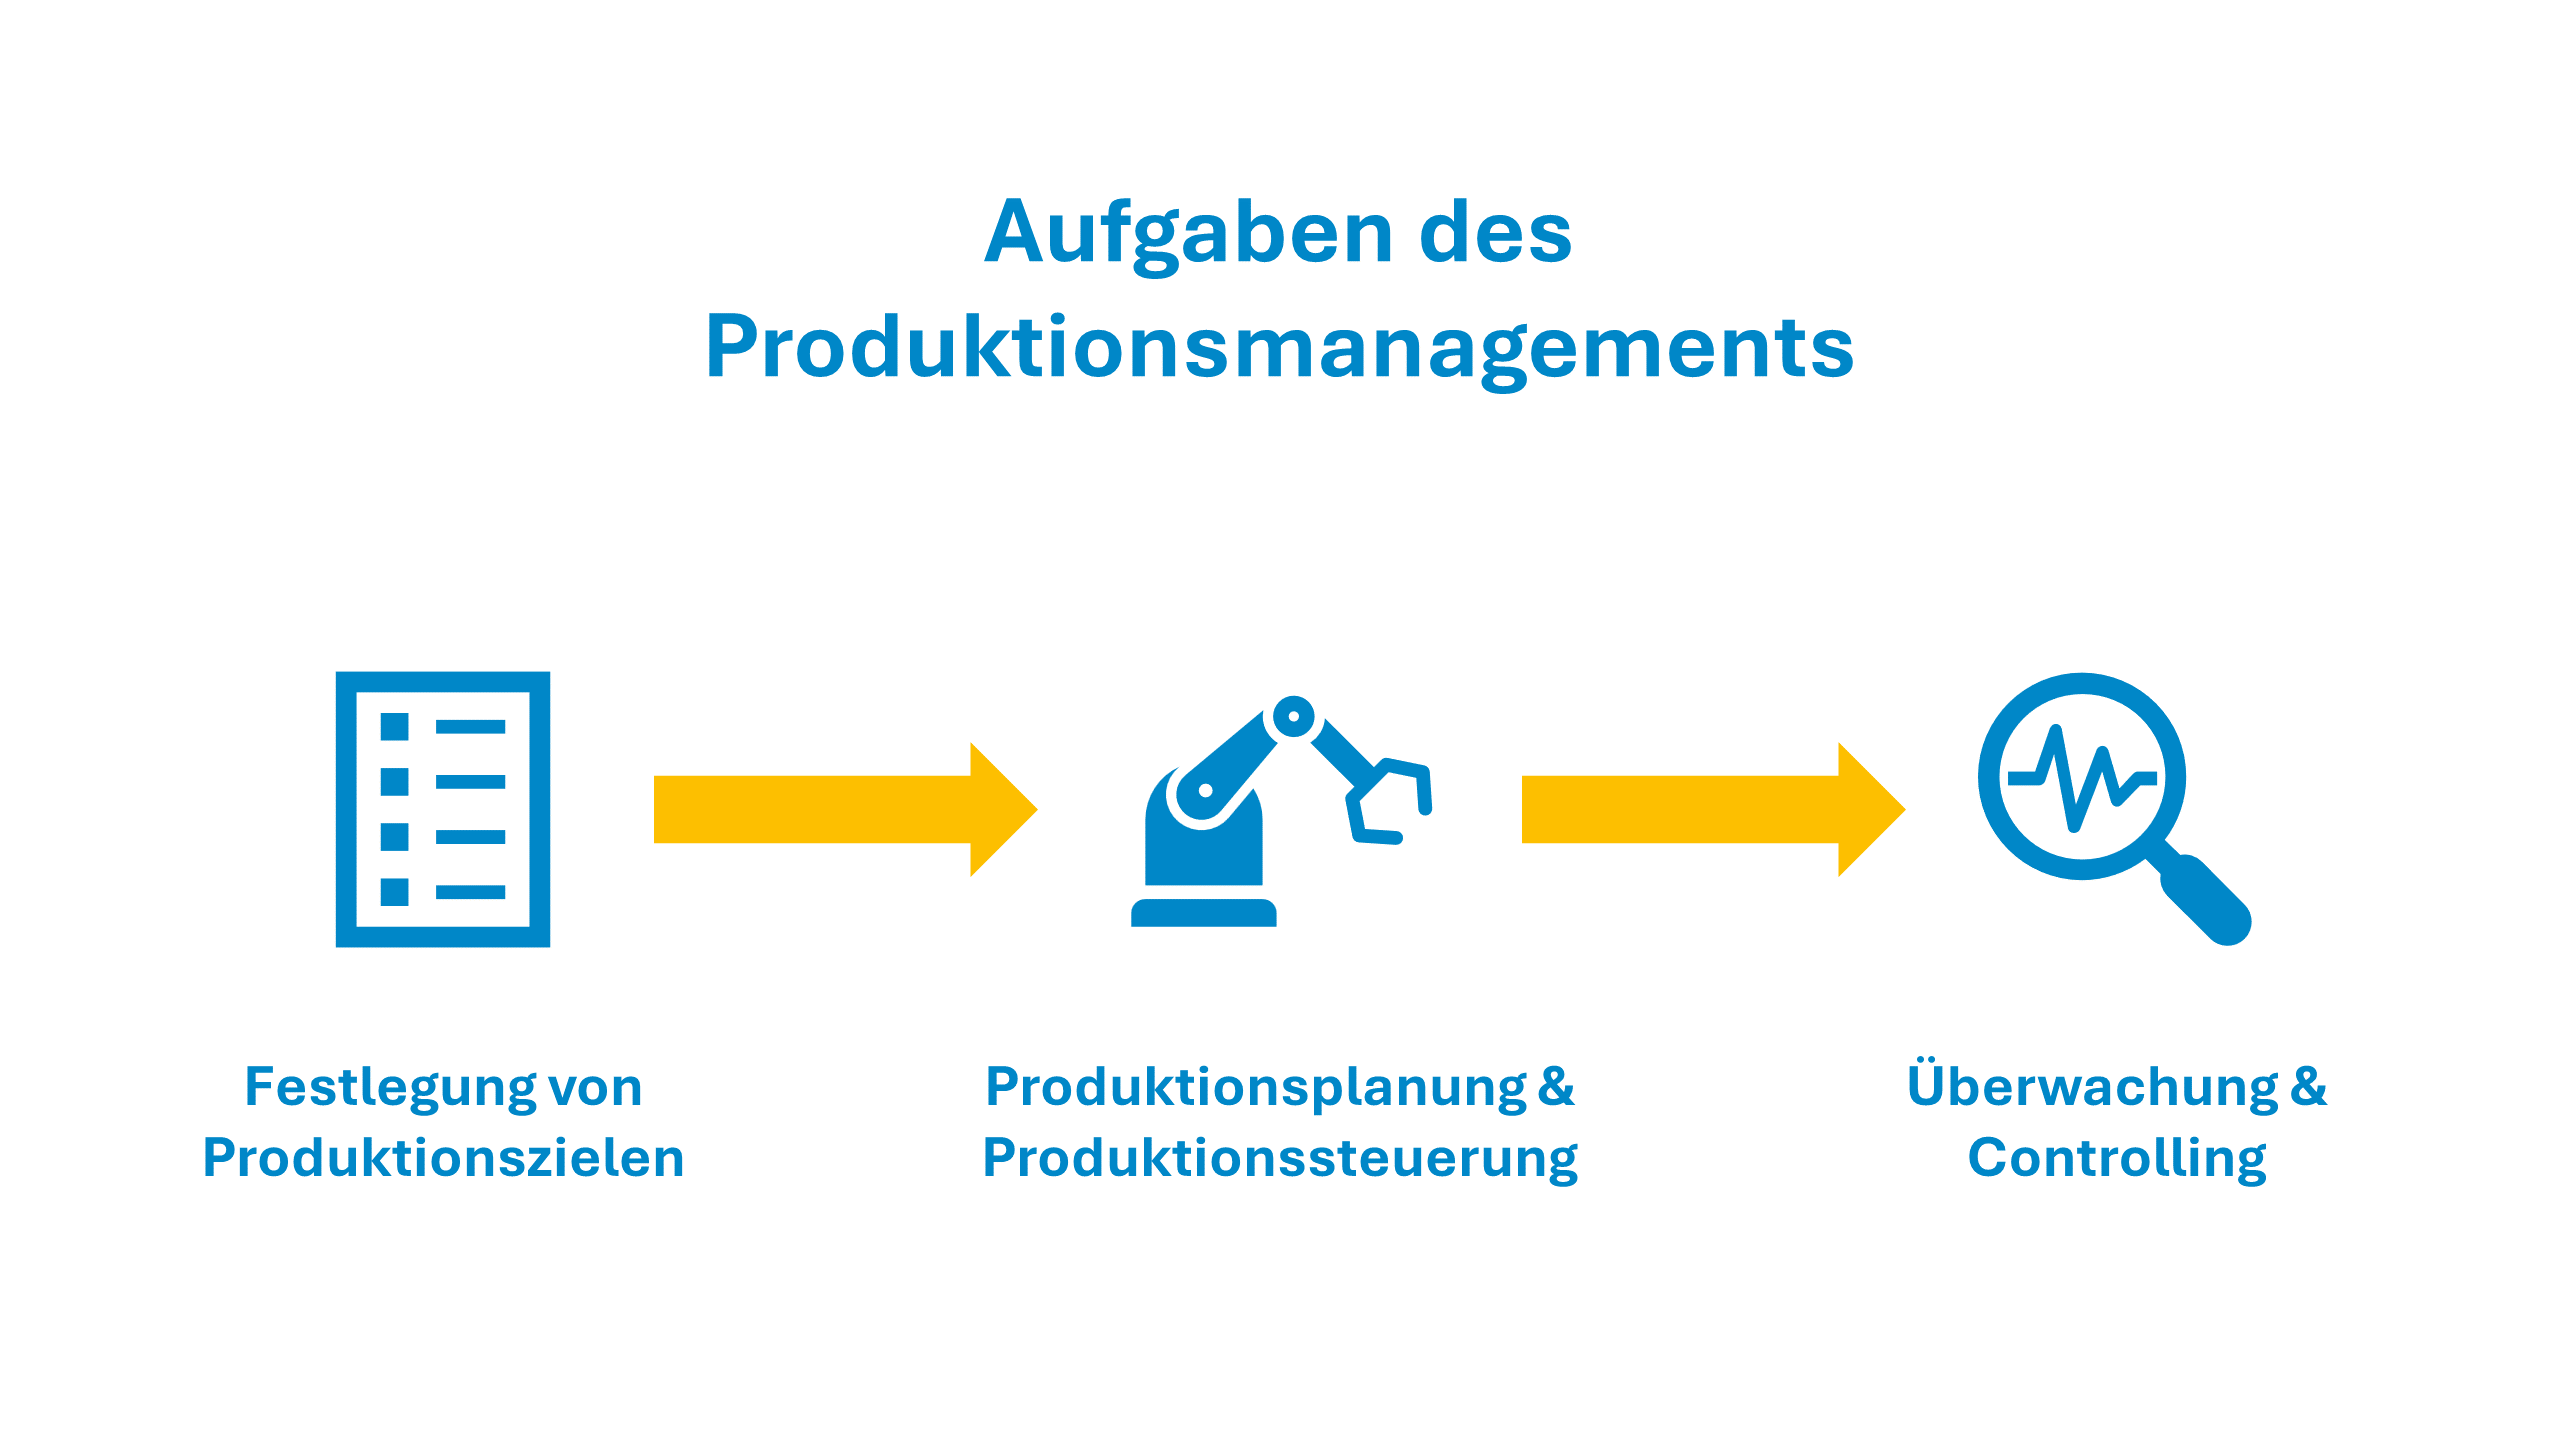 Die Kernaufgaben des Produktionsmanagements